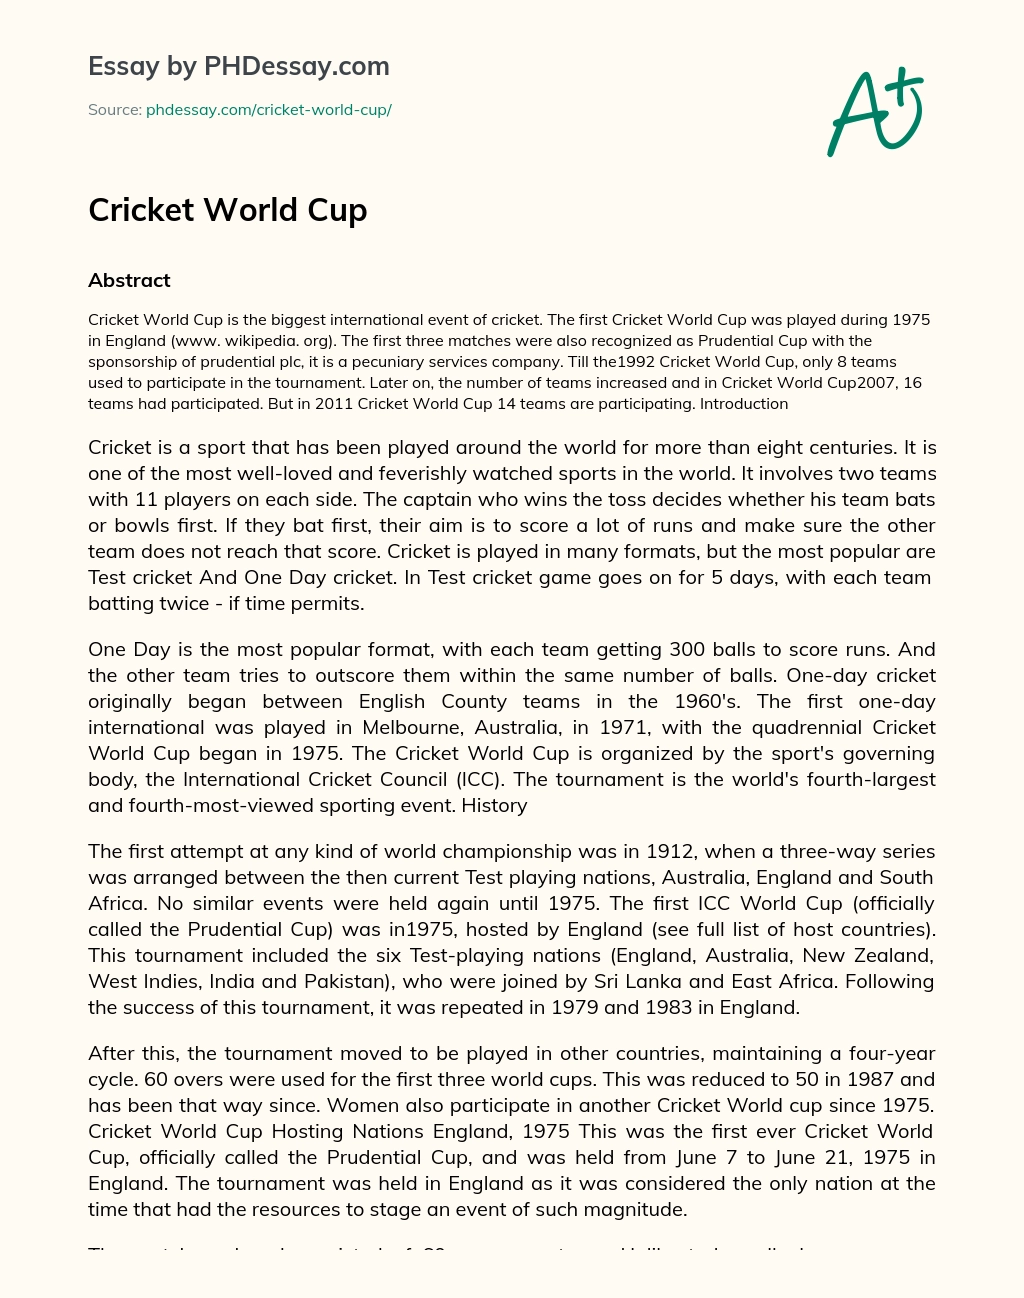 Cricket World Cup essay